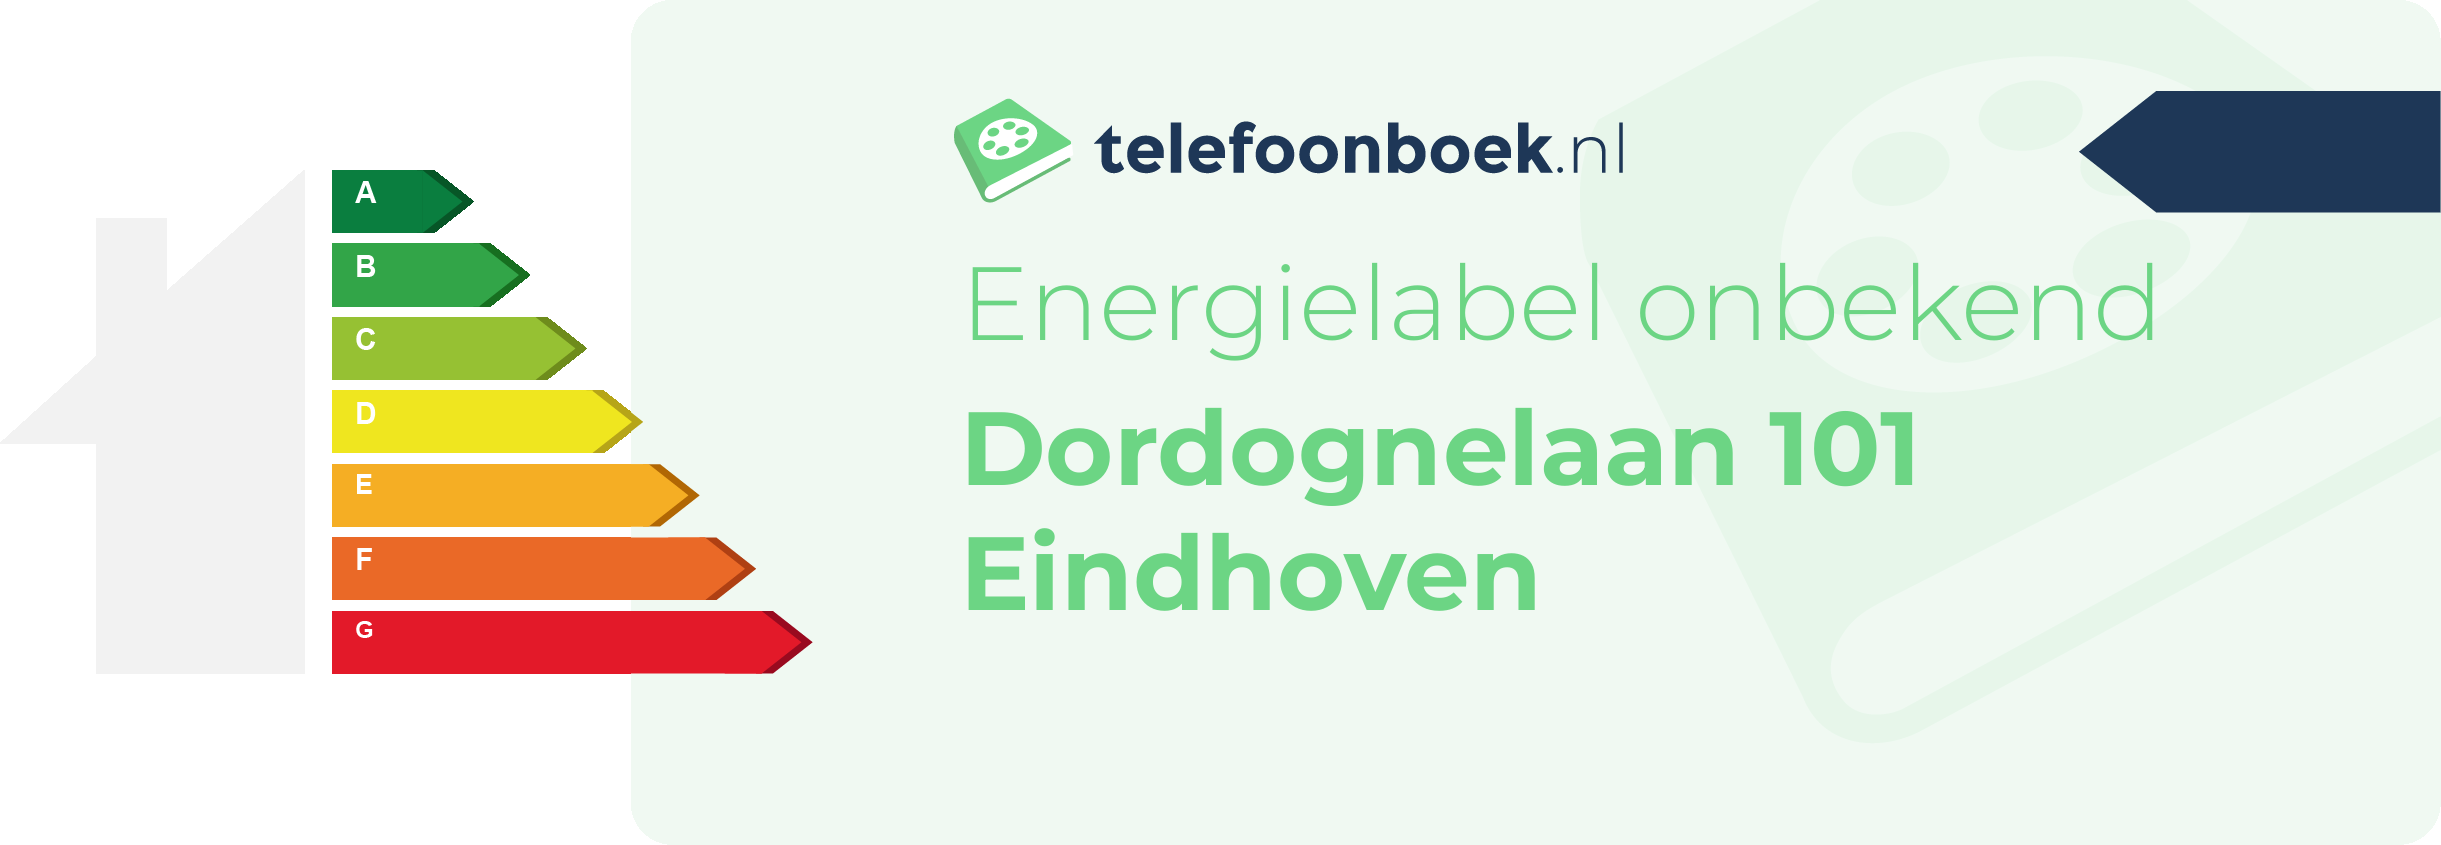 Energielabel Dordognelaan 101 Eindhoven